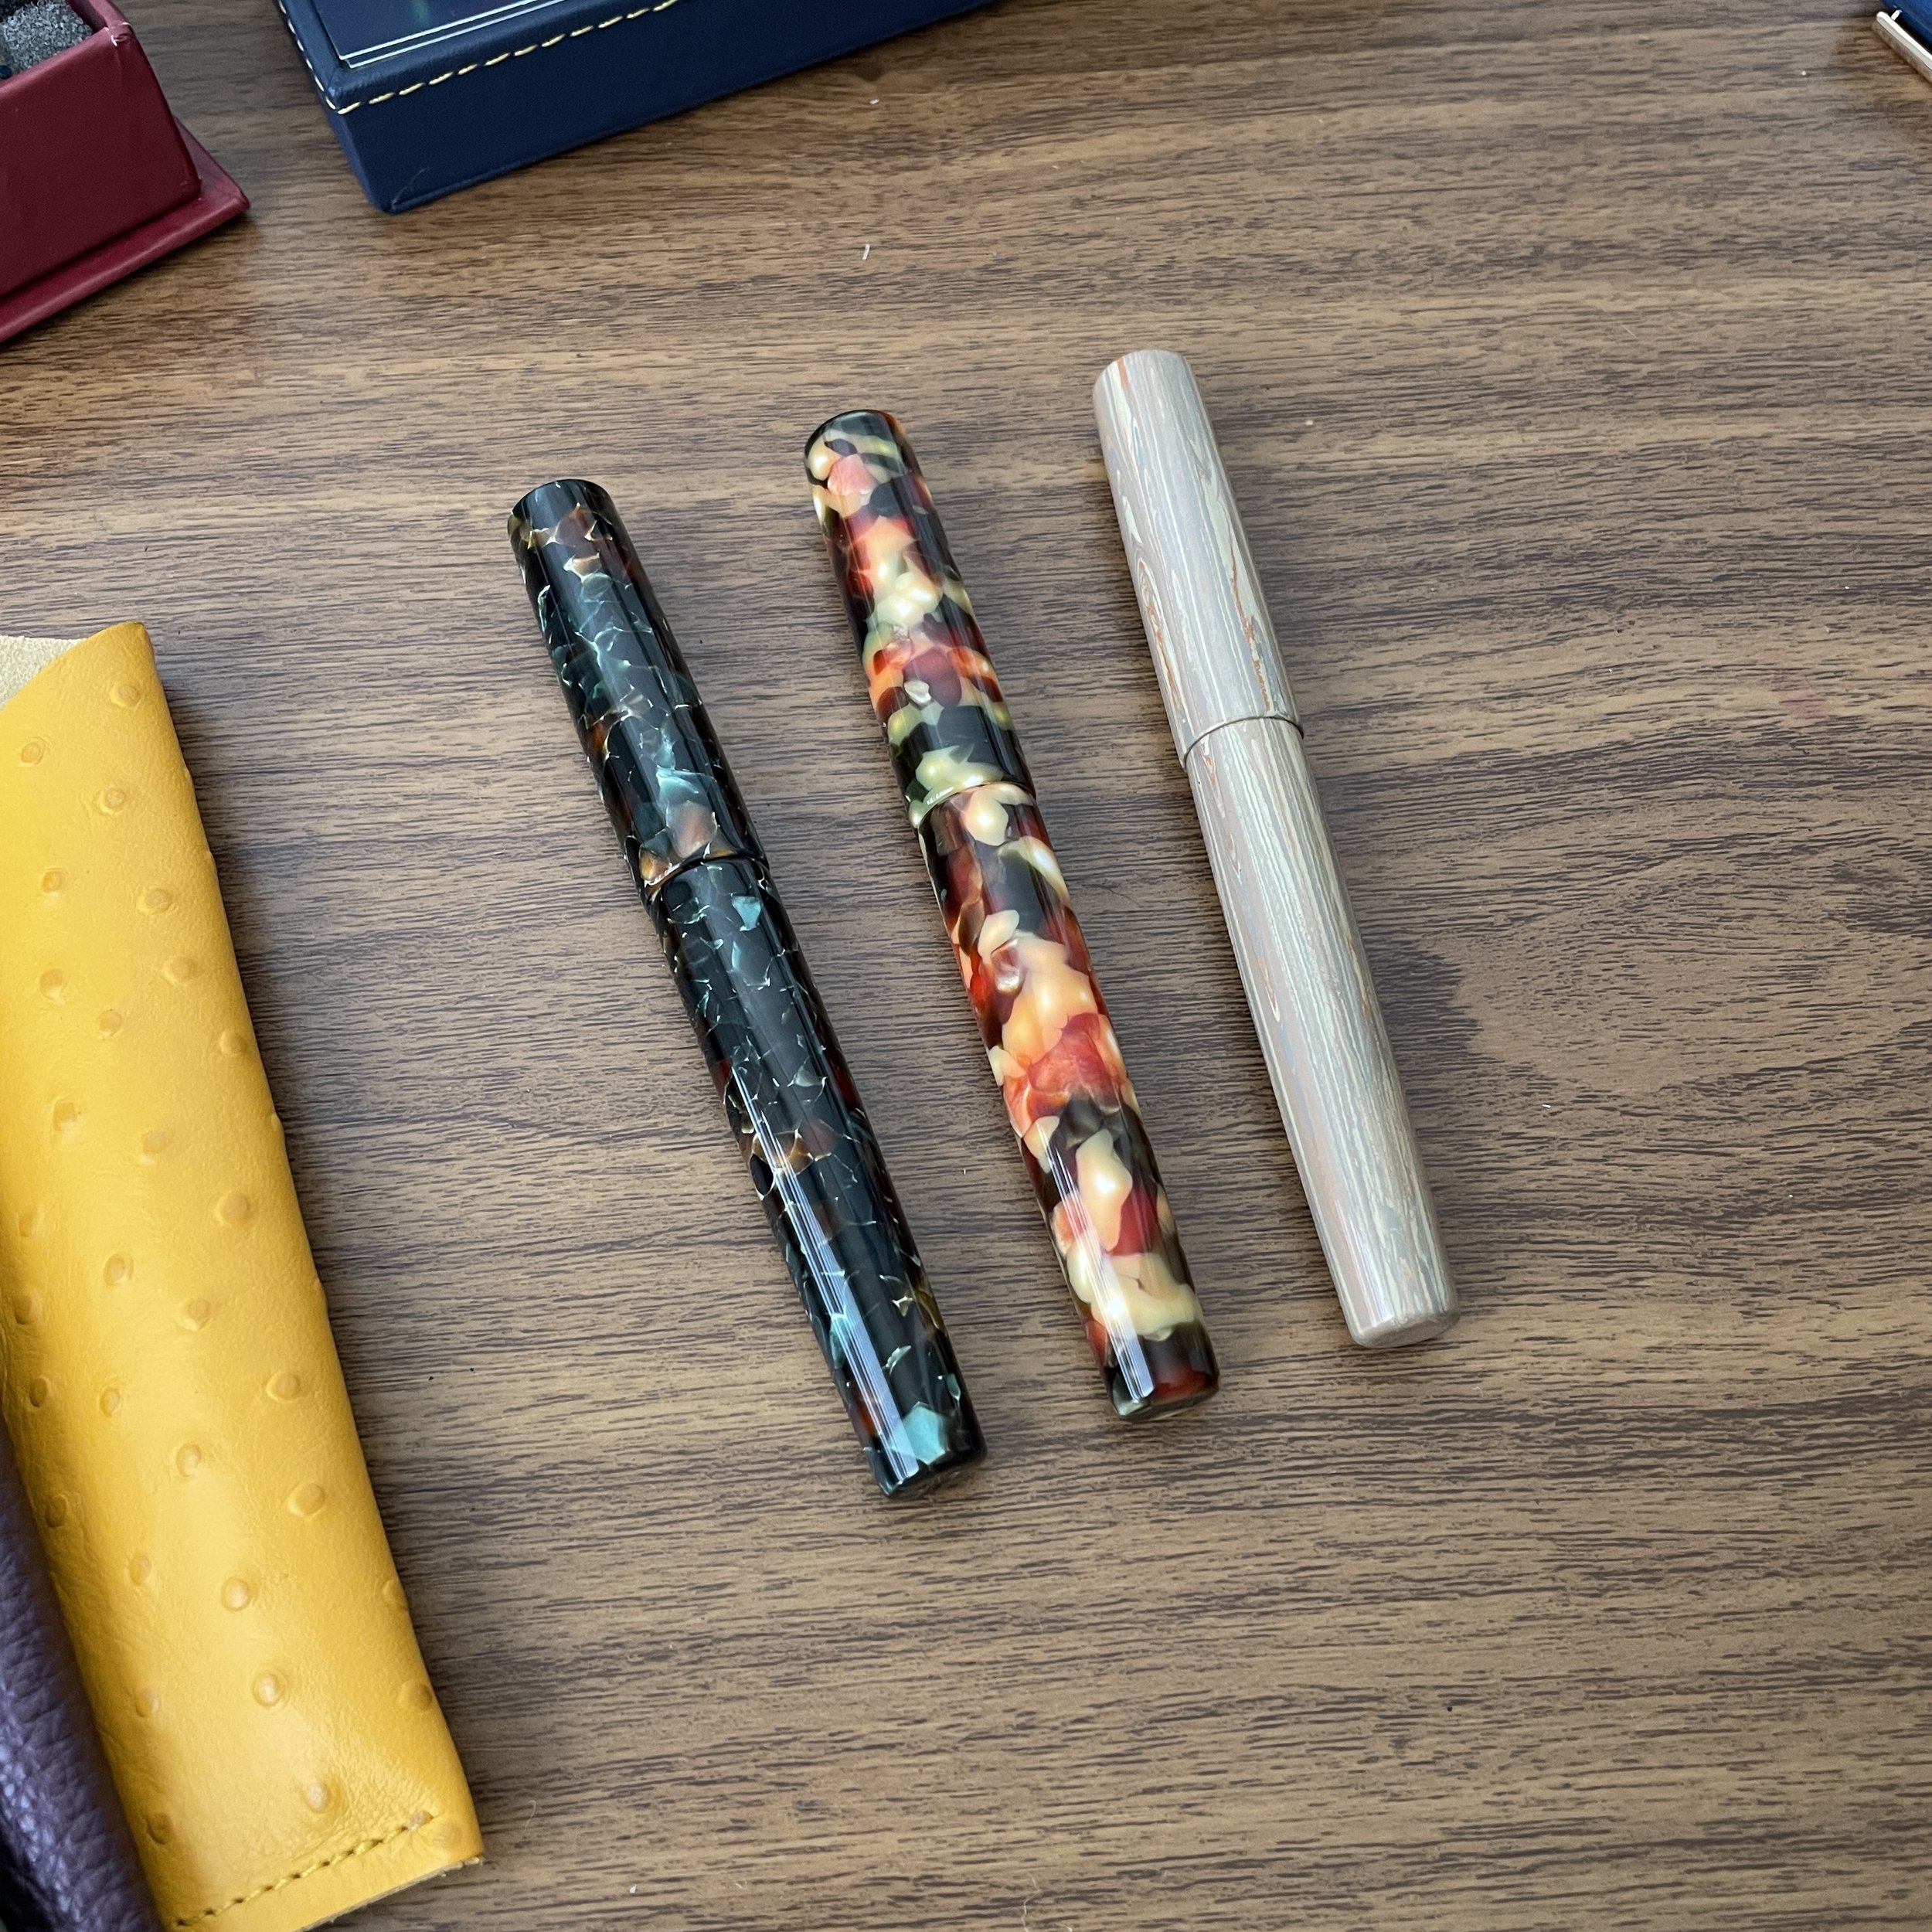 Fountain Pen Nib Sizes: What Do They Mean? – Loclen